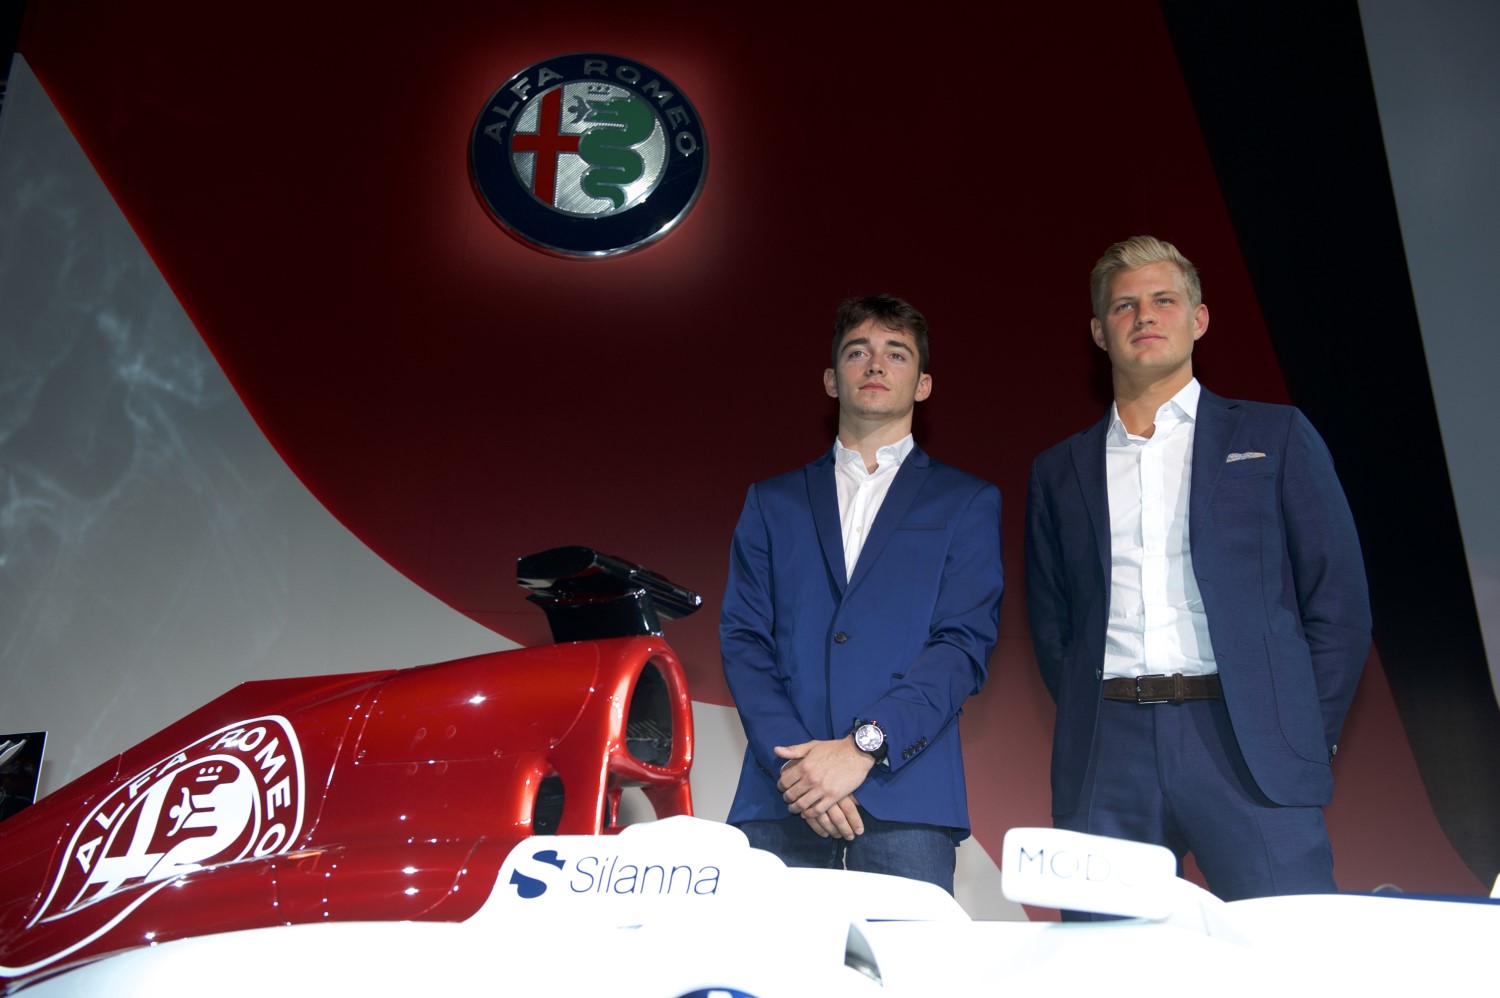 Leclerc and Ericsson